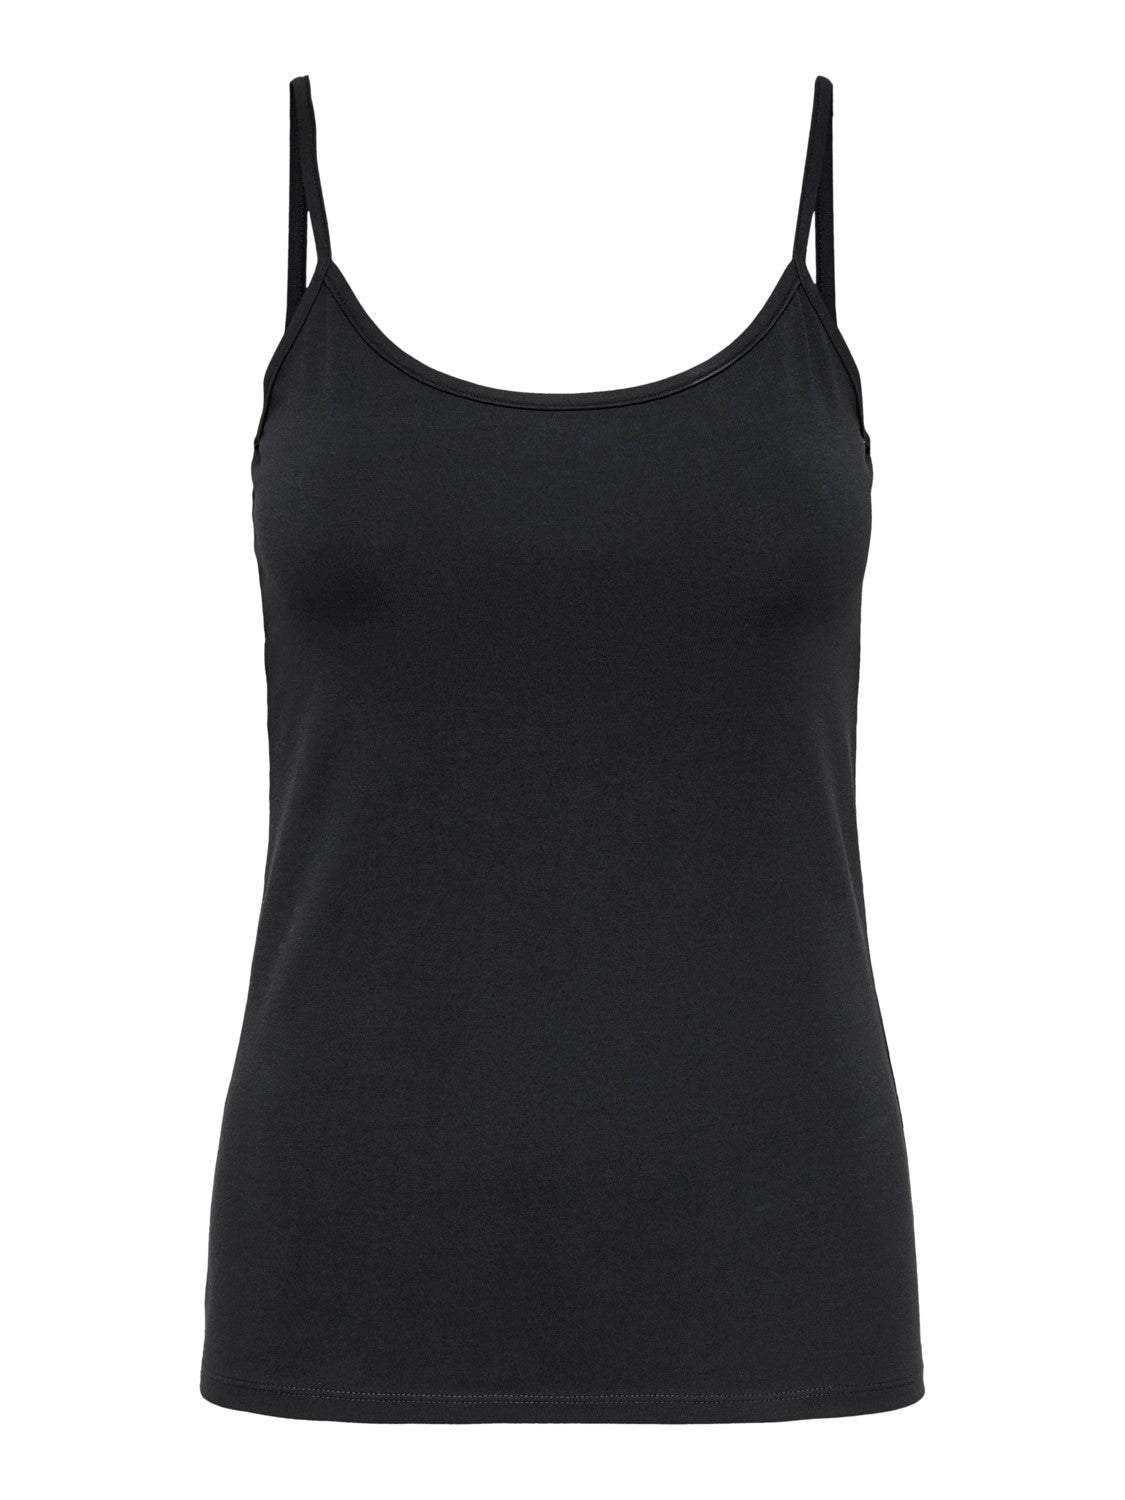 Women's ONLY black thin straps tank top